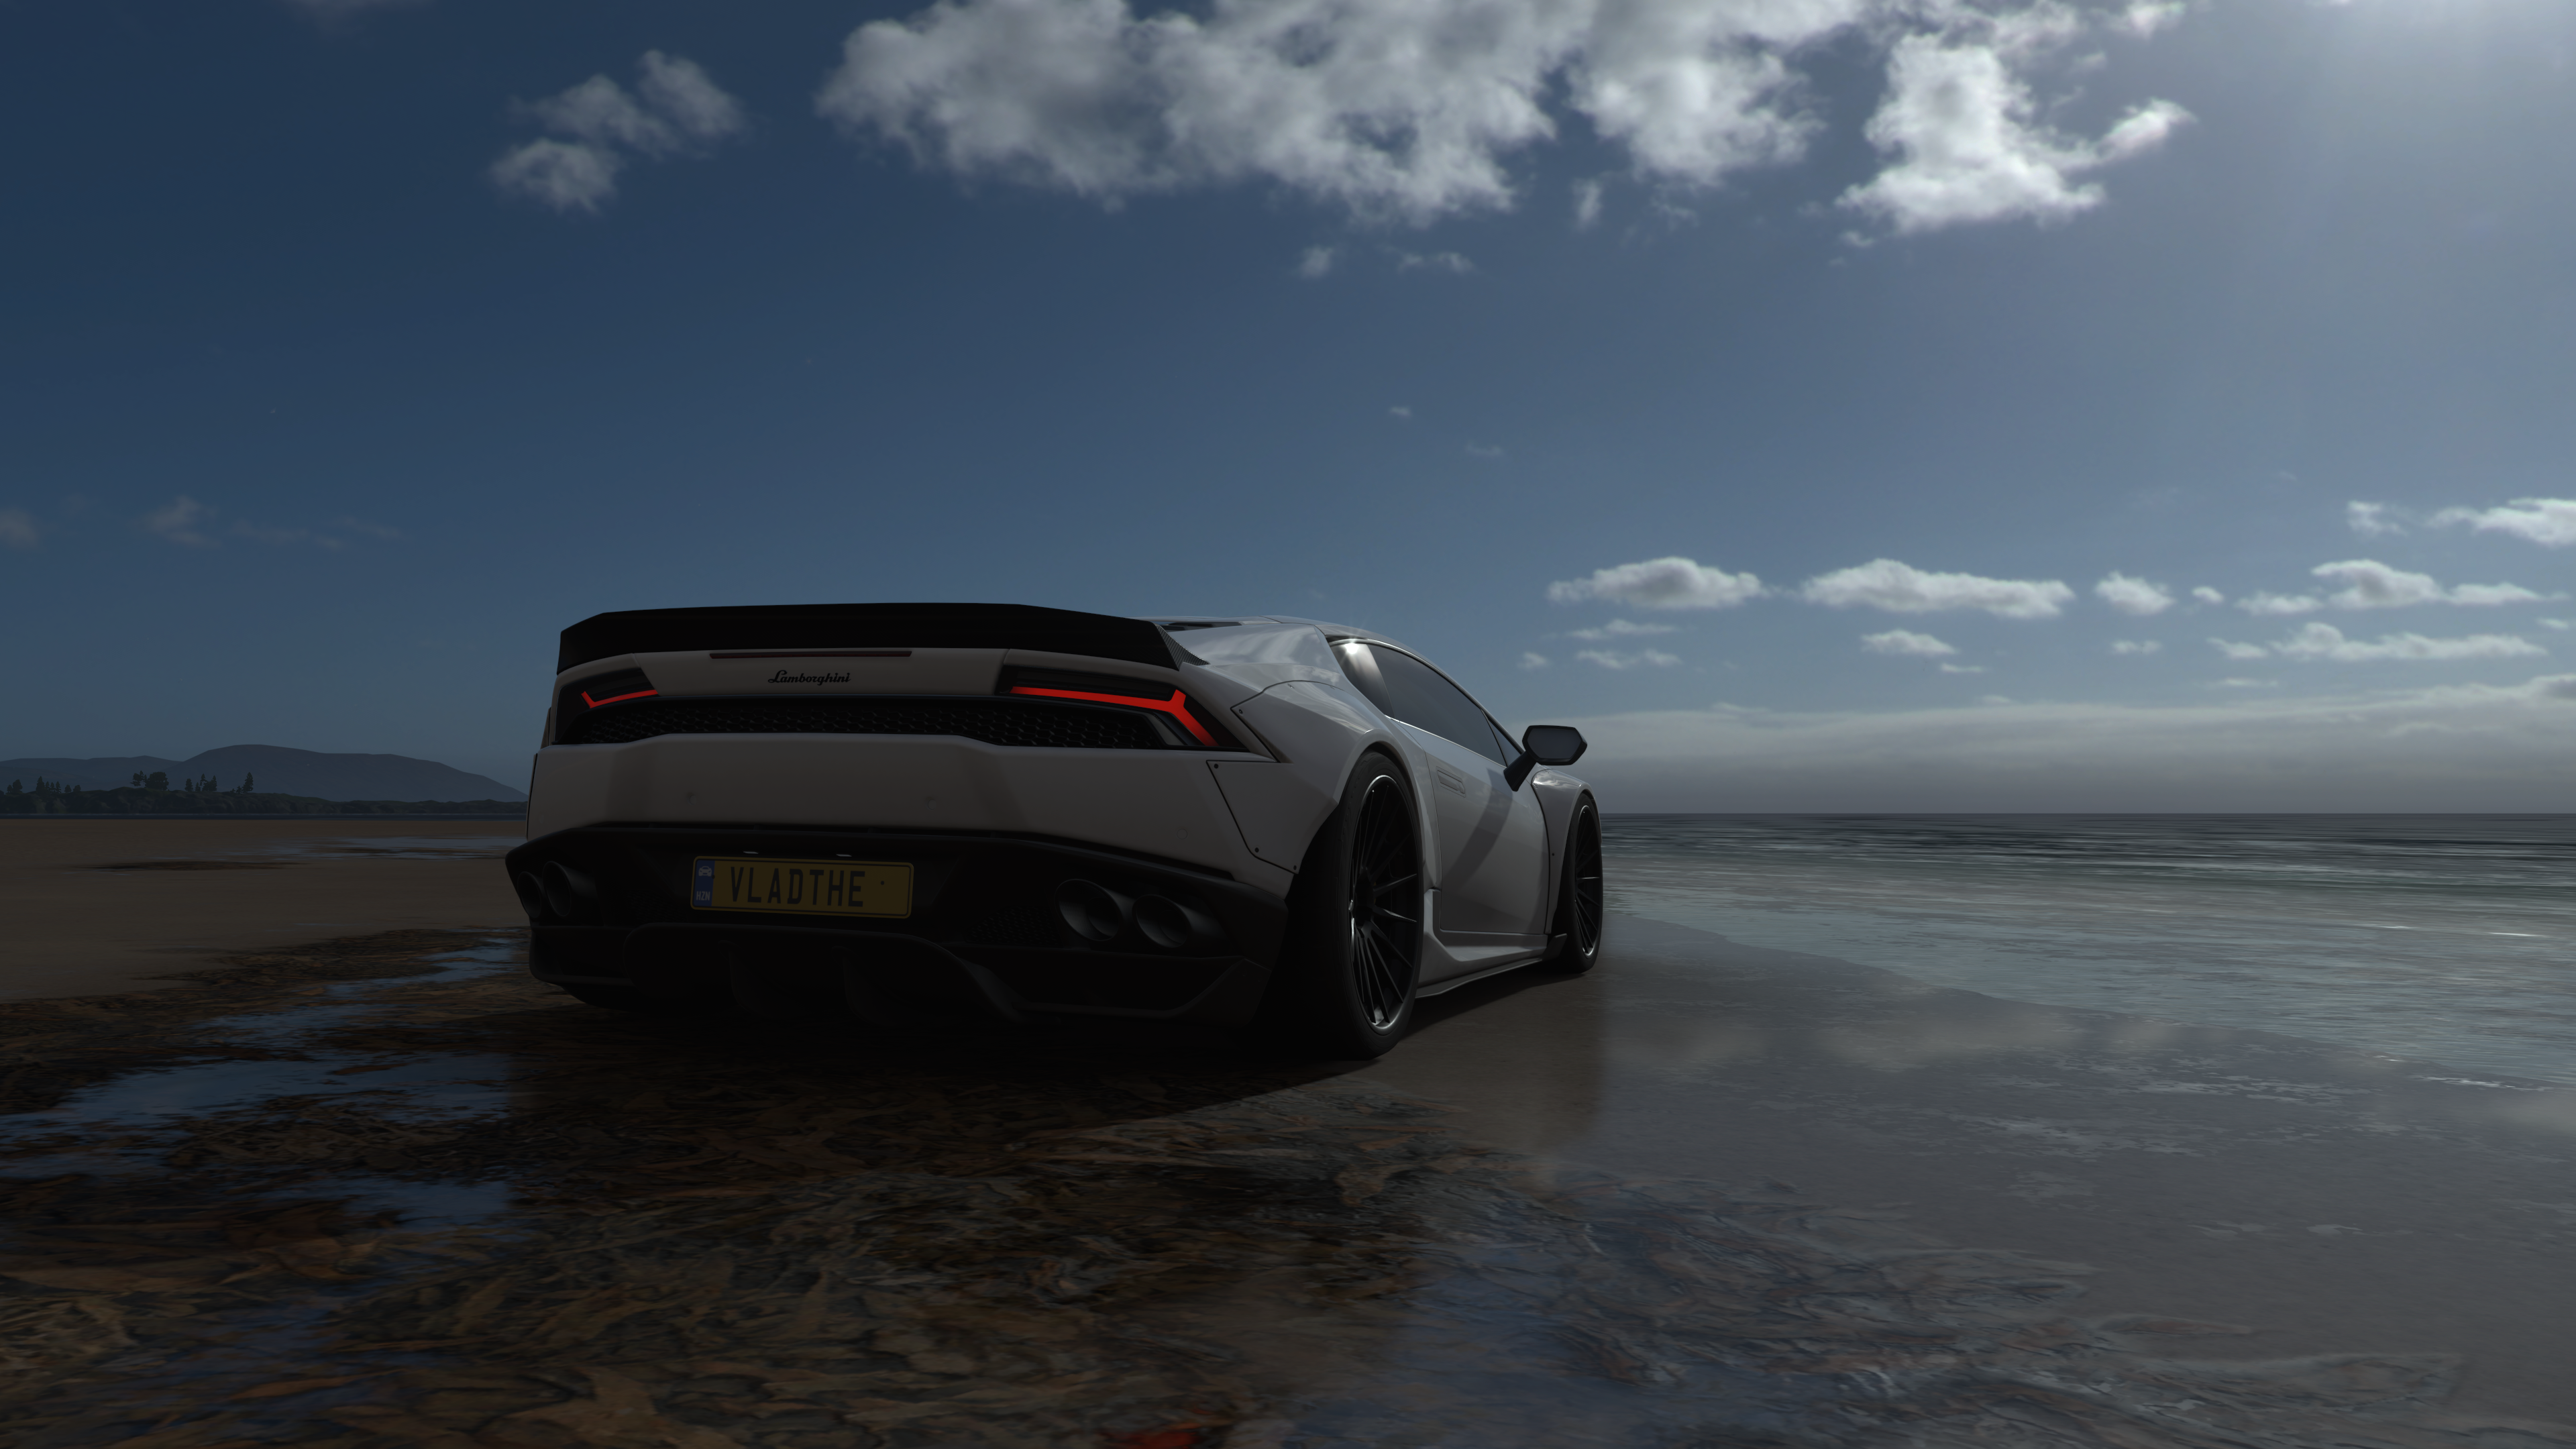 General 3840x2160 Forza Horizon 4 Lamborghini sand beach sky video games vehicle screen shot car